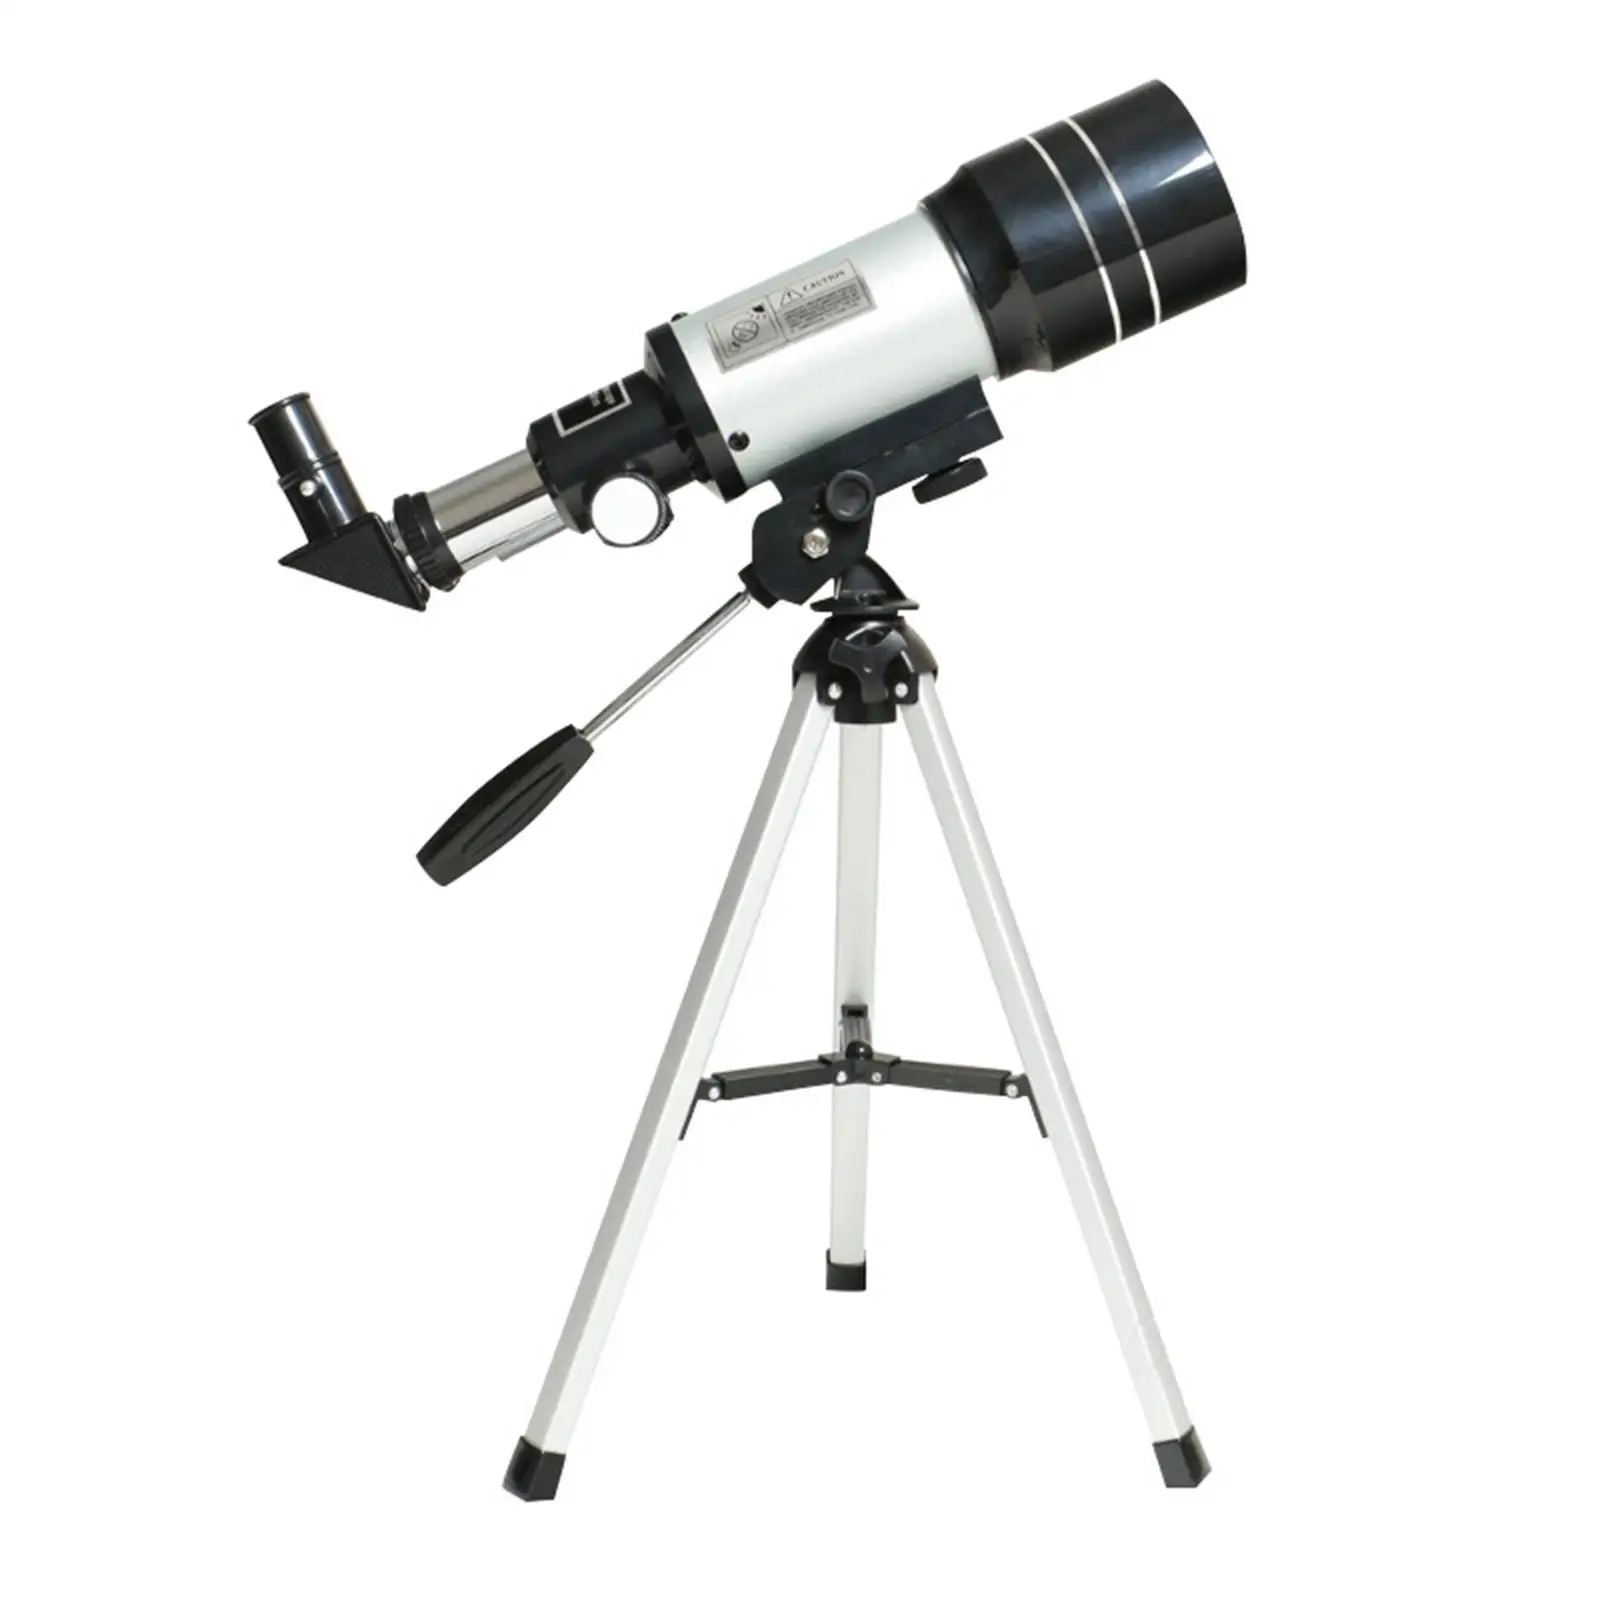 70mm Aperture 300mm Focal Telescope for Beginners Adjustable Tripod Panning Handle